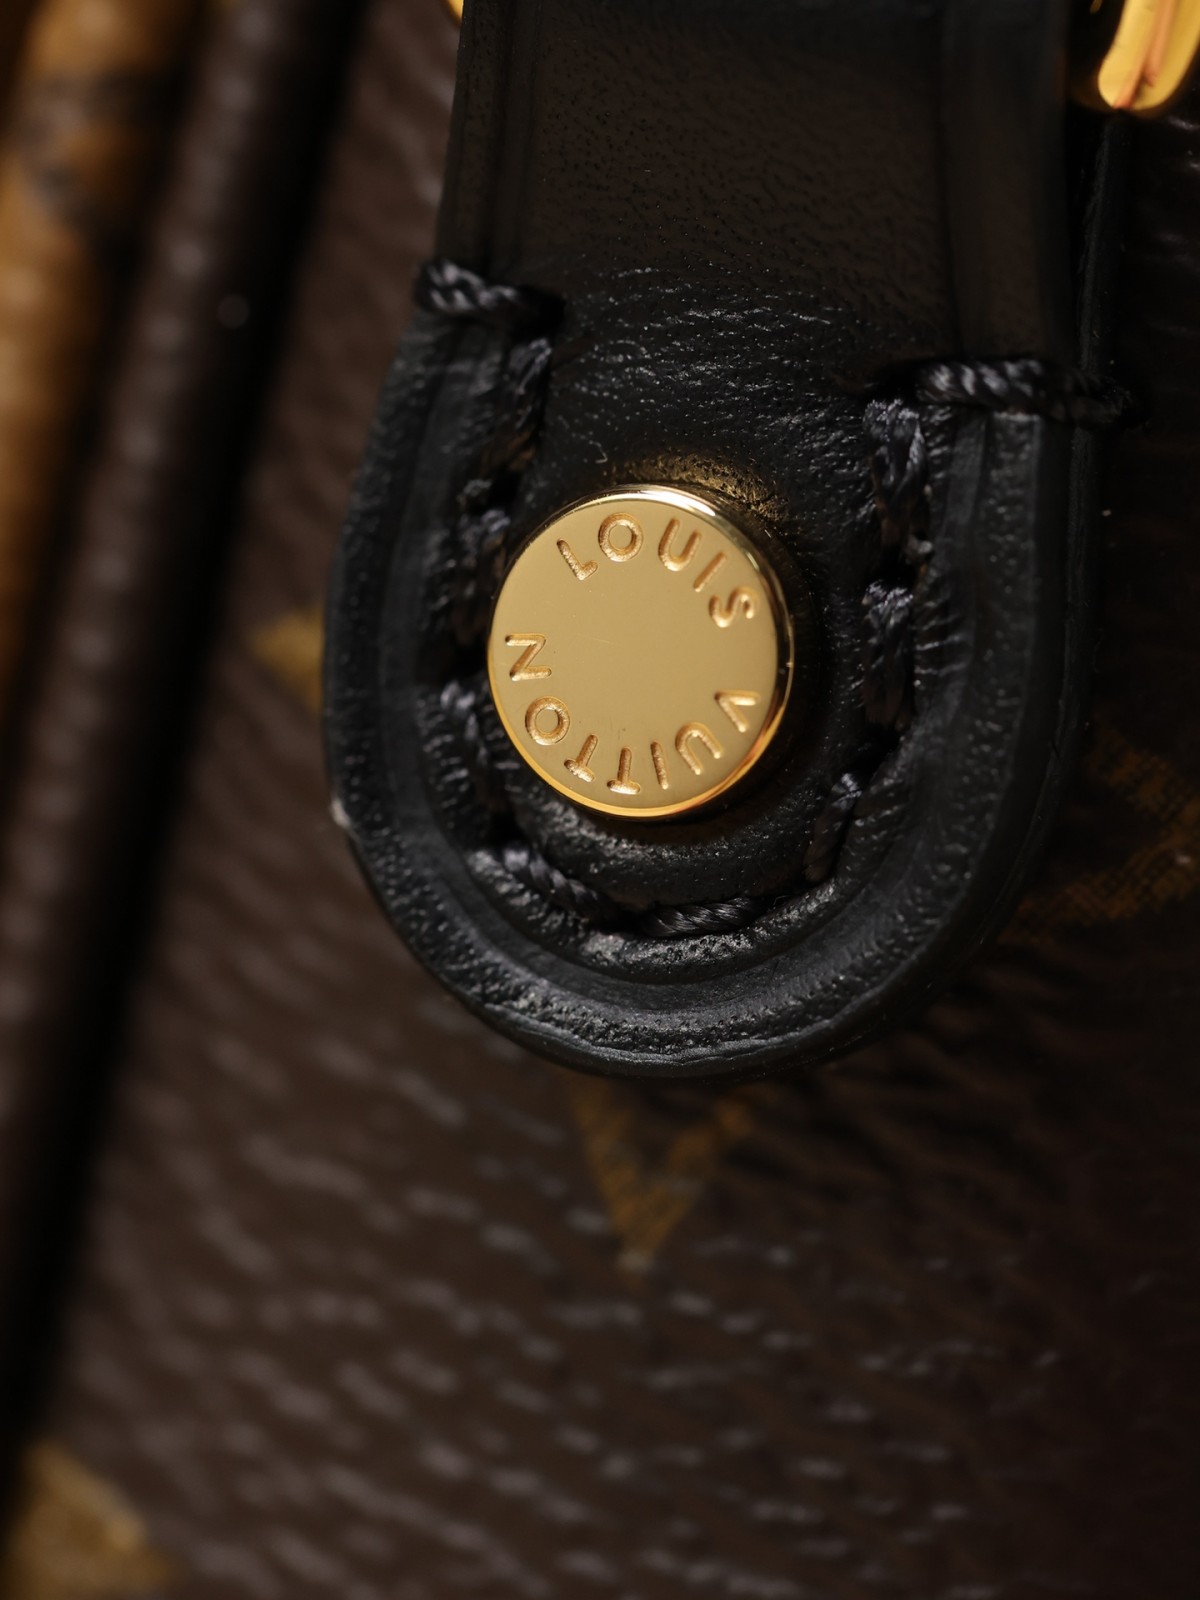 Lifetime Must Buy Designer Bag Review——Louis Vuitton M44876 Metis Bag (2022 updated)-Best Quality Fake designer Bag Review, Replica designer bag ru